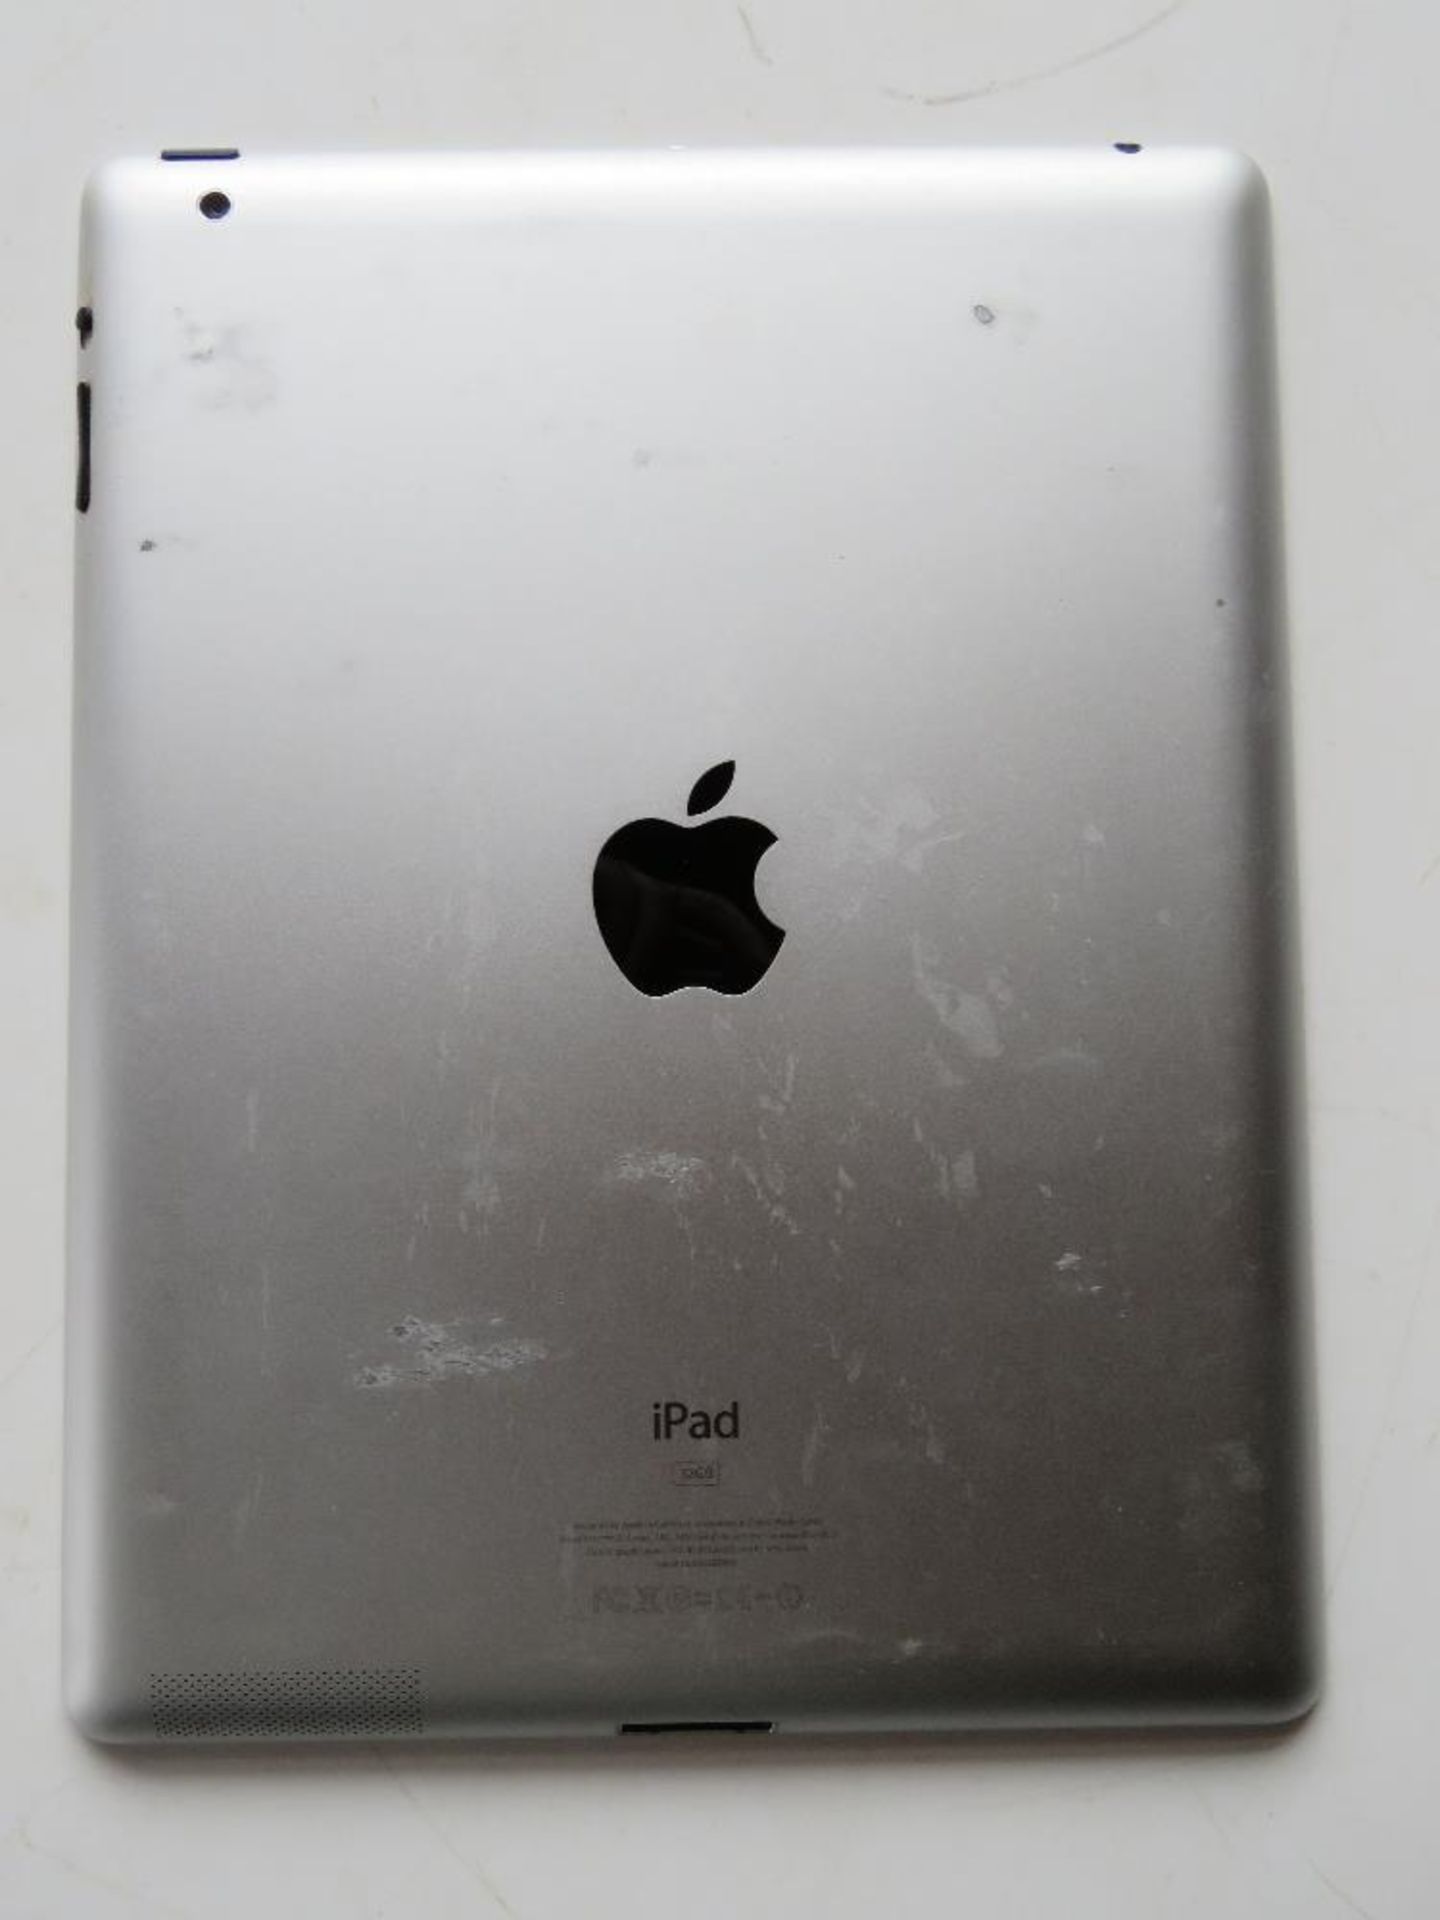 Apple iPad silver 32GB A1395 9. - Image 3 of 8